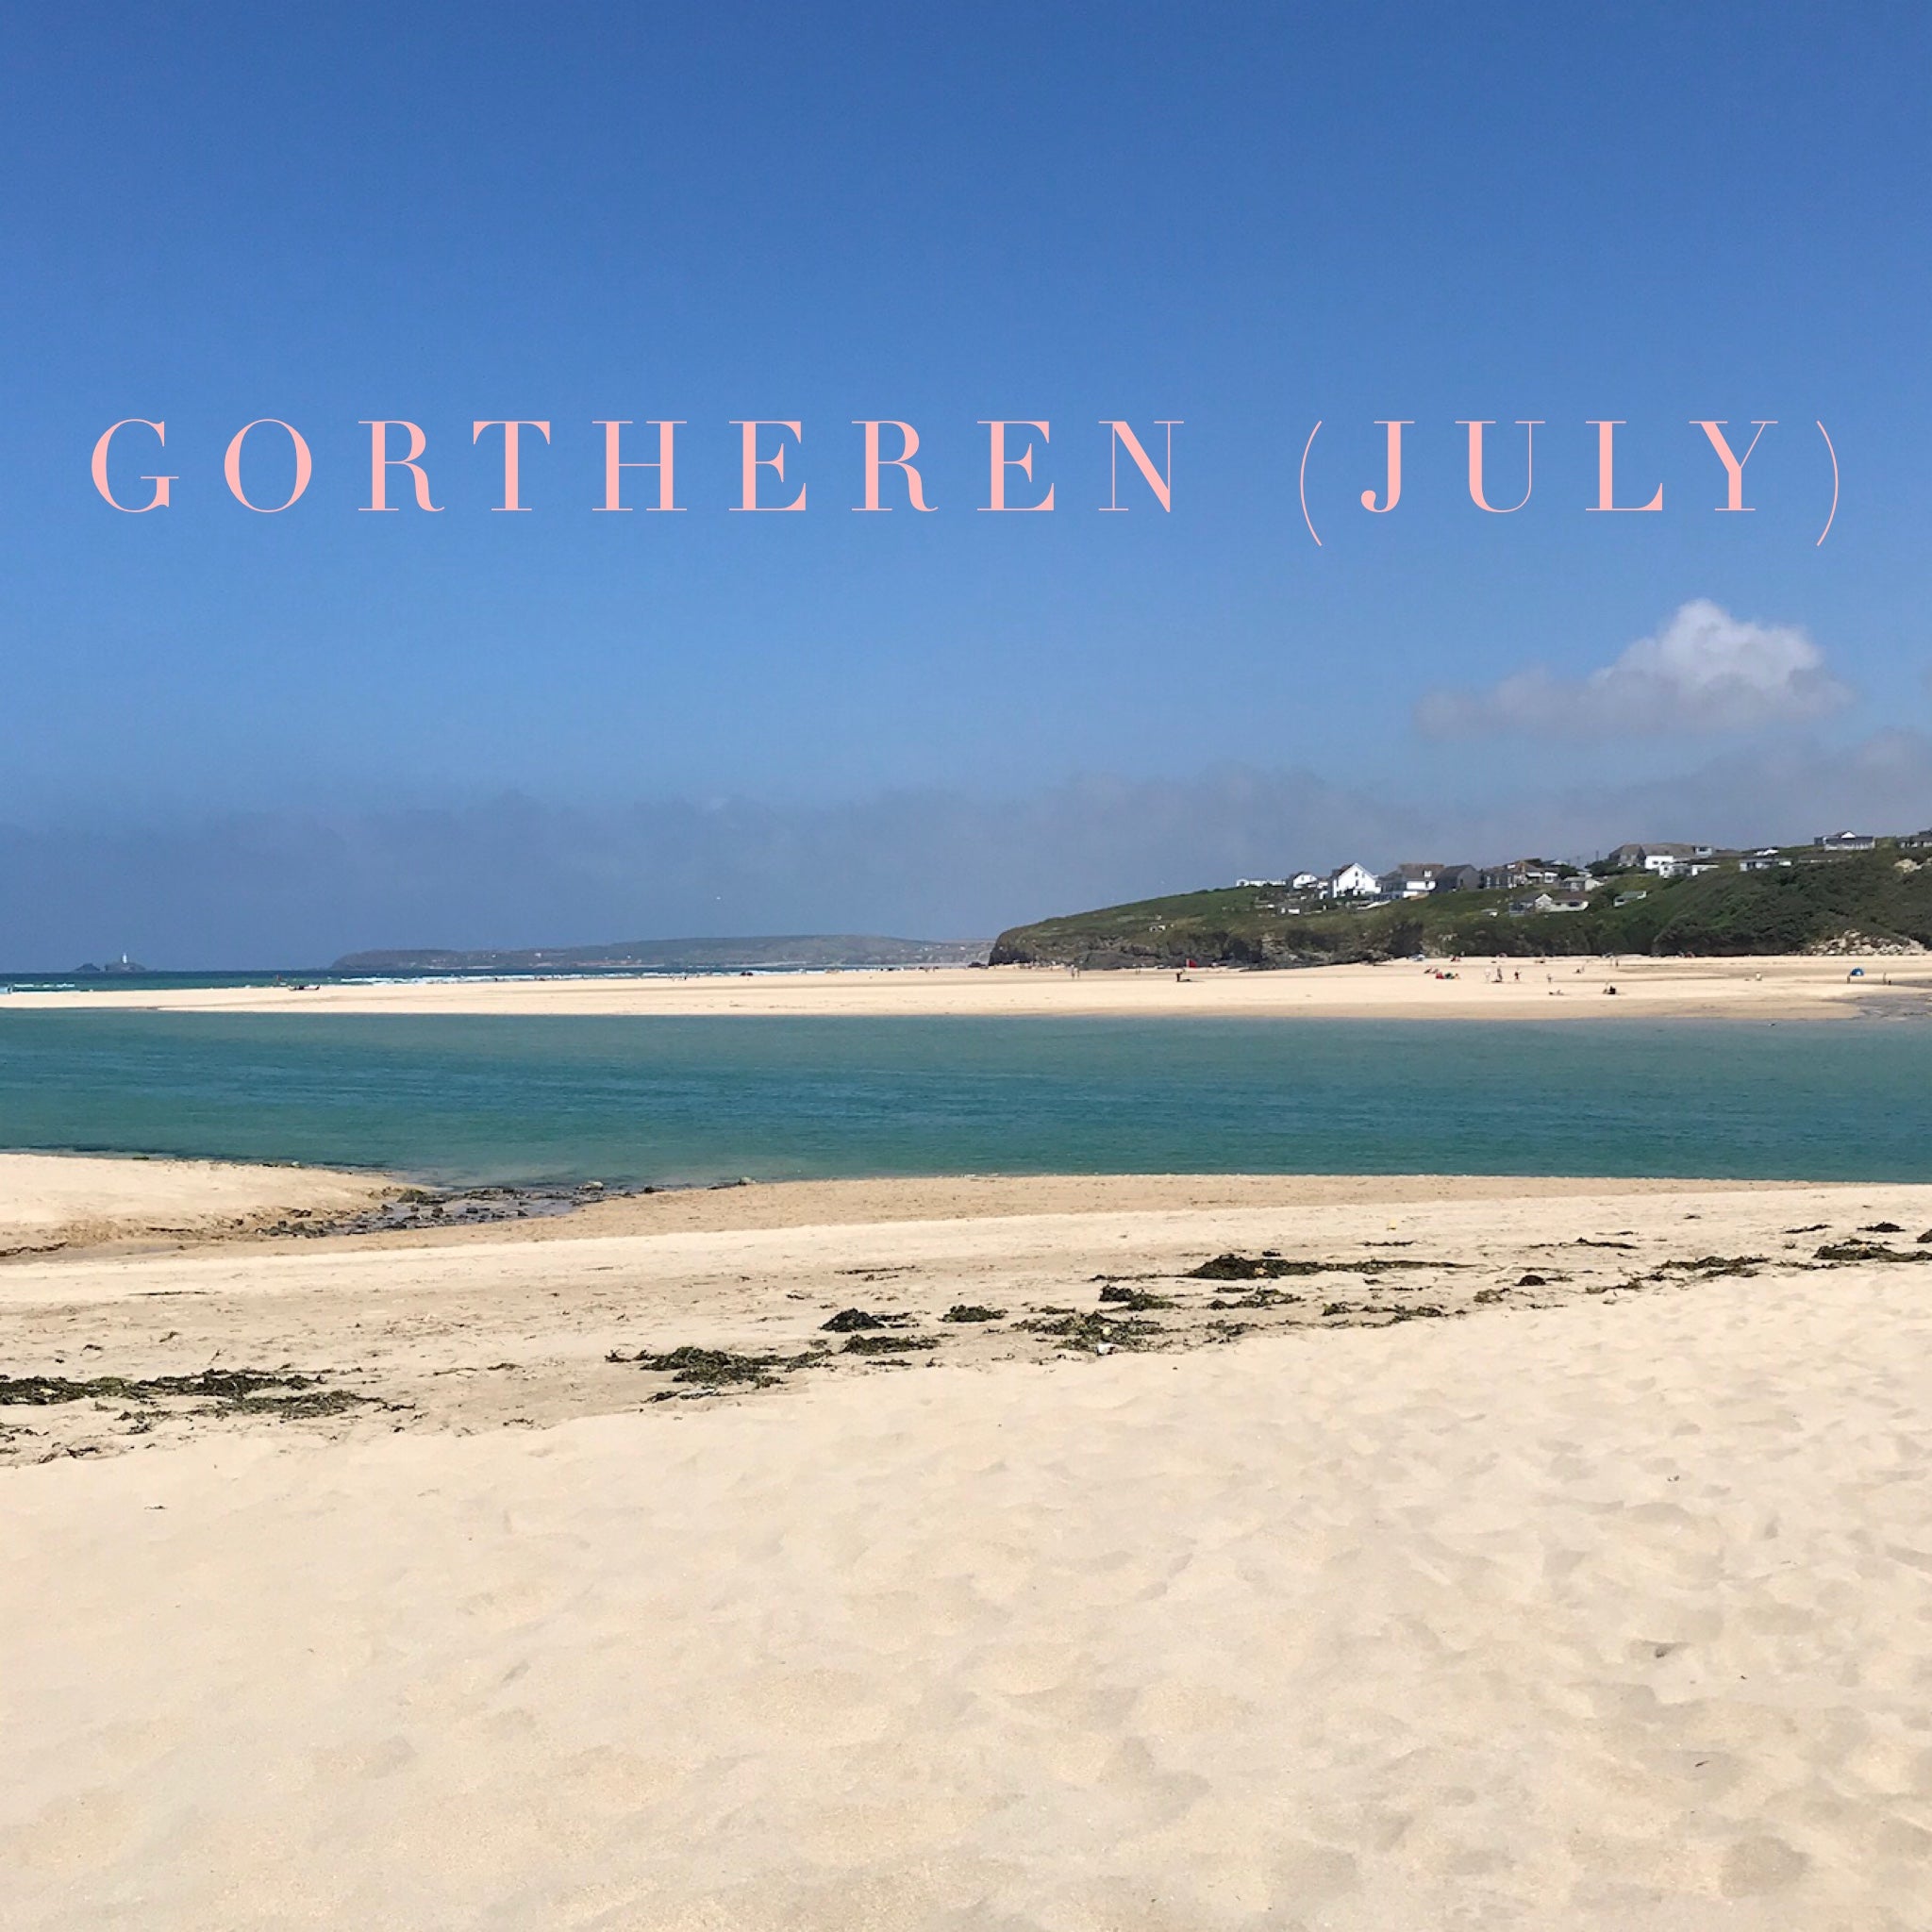 July in Cornwall cornish language